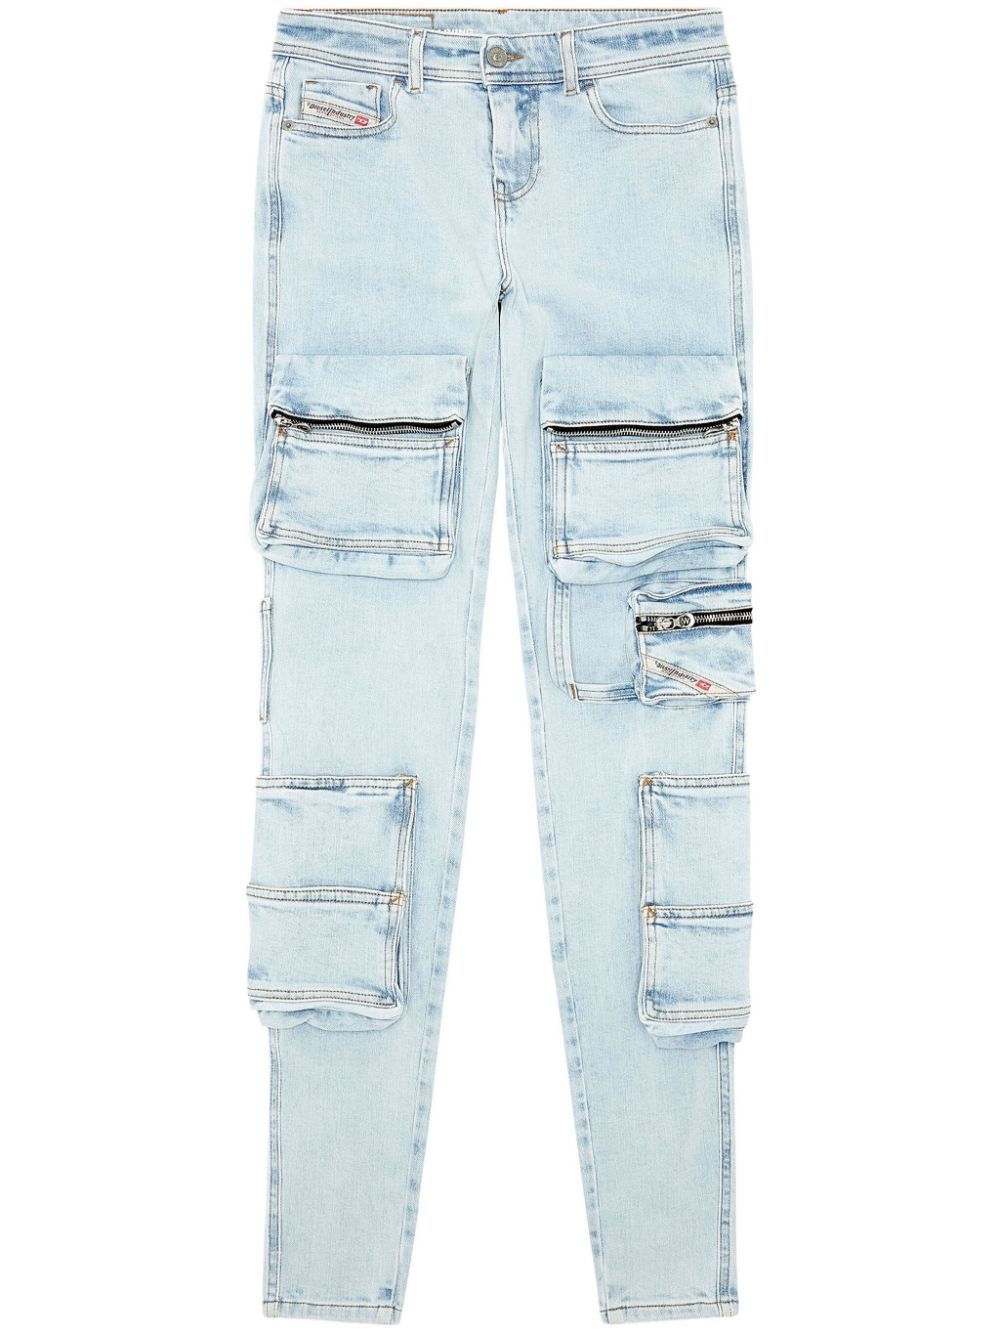 1984 Slandy-High high-rise skinny jeans - 1